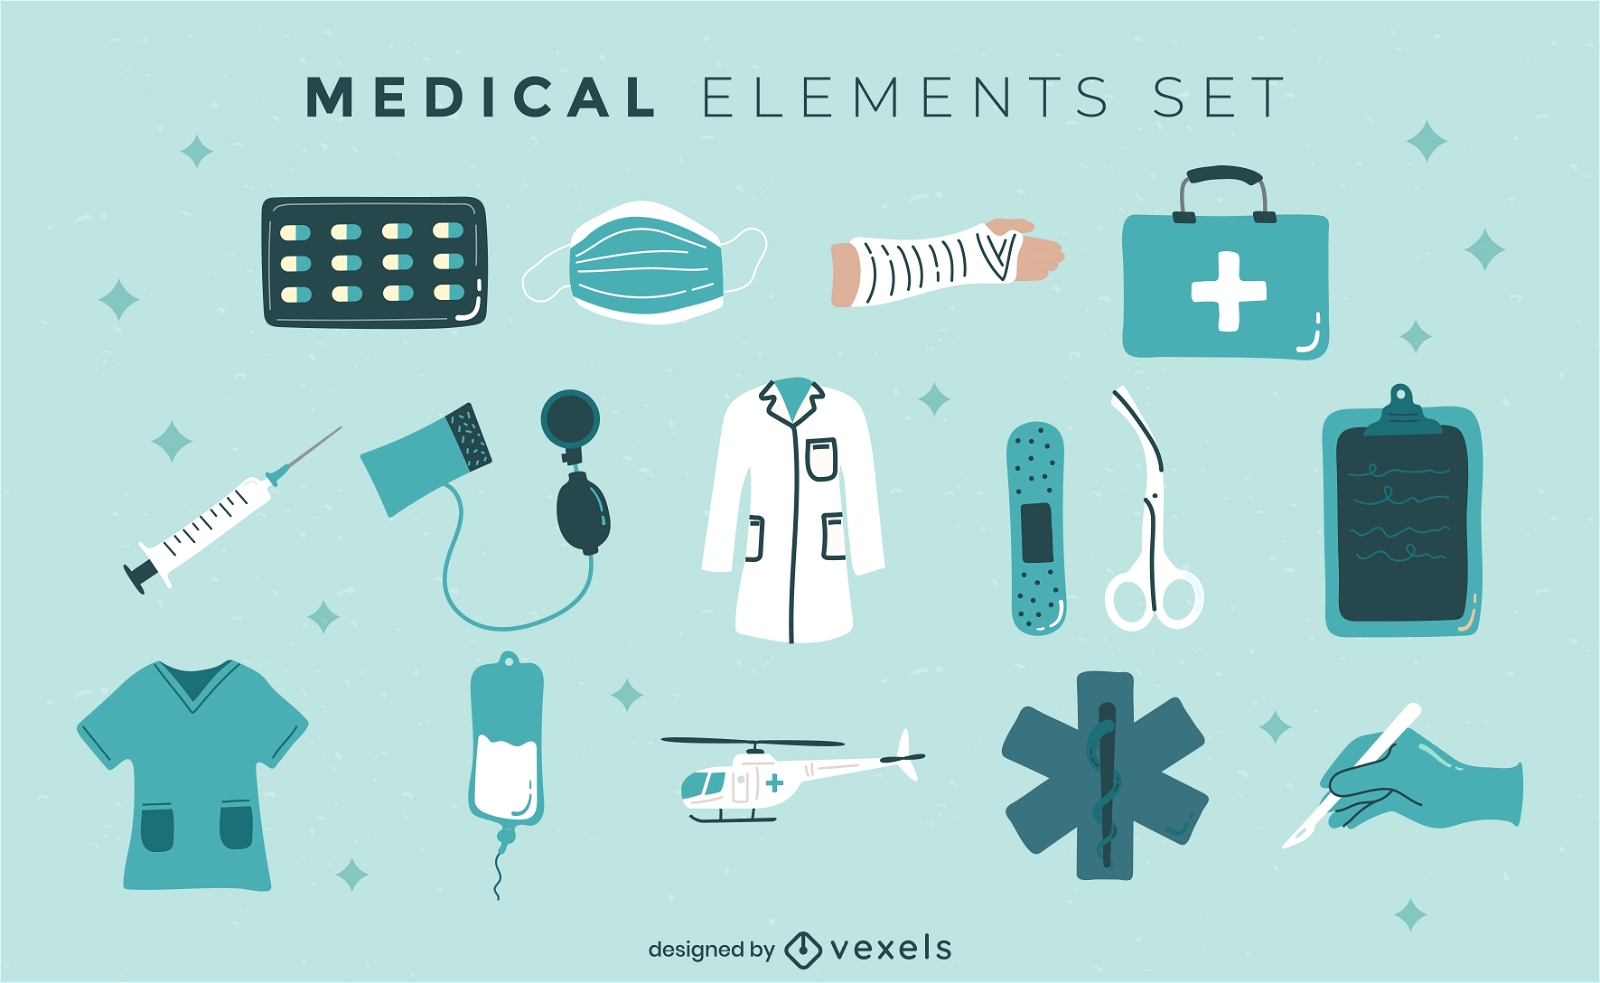 Medical equipment and uniform elements set